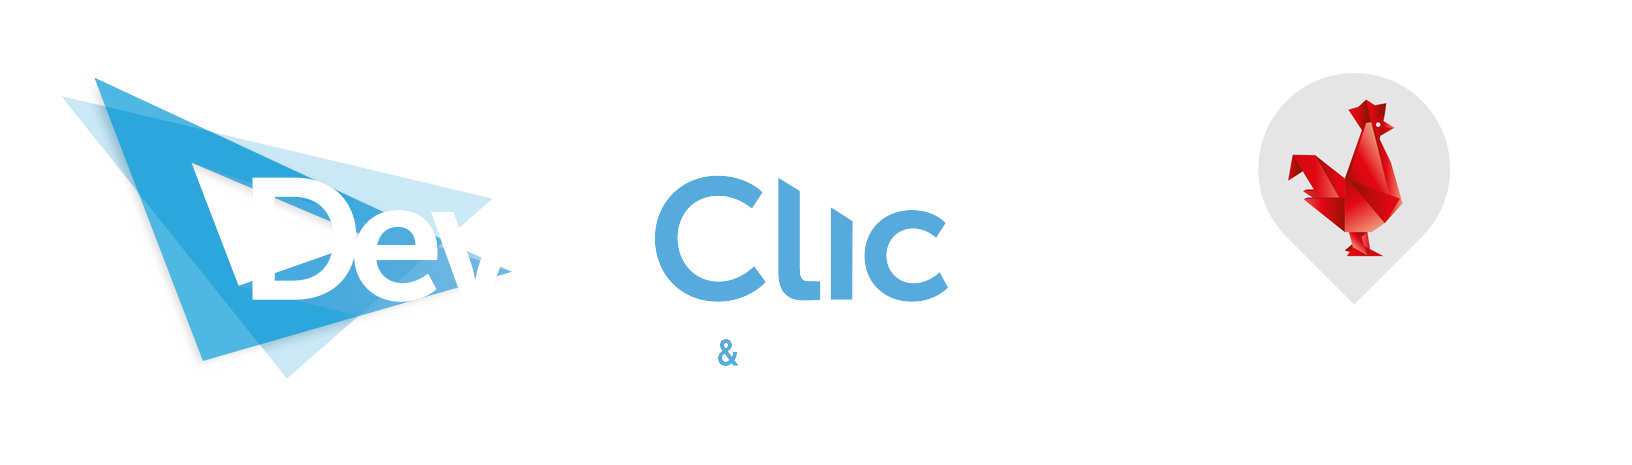 Logo Dev&Clic - French Tech Normandy Caen